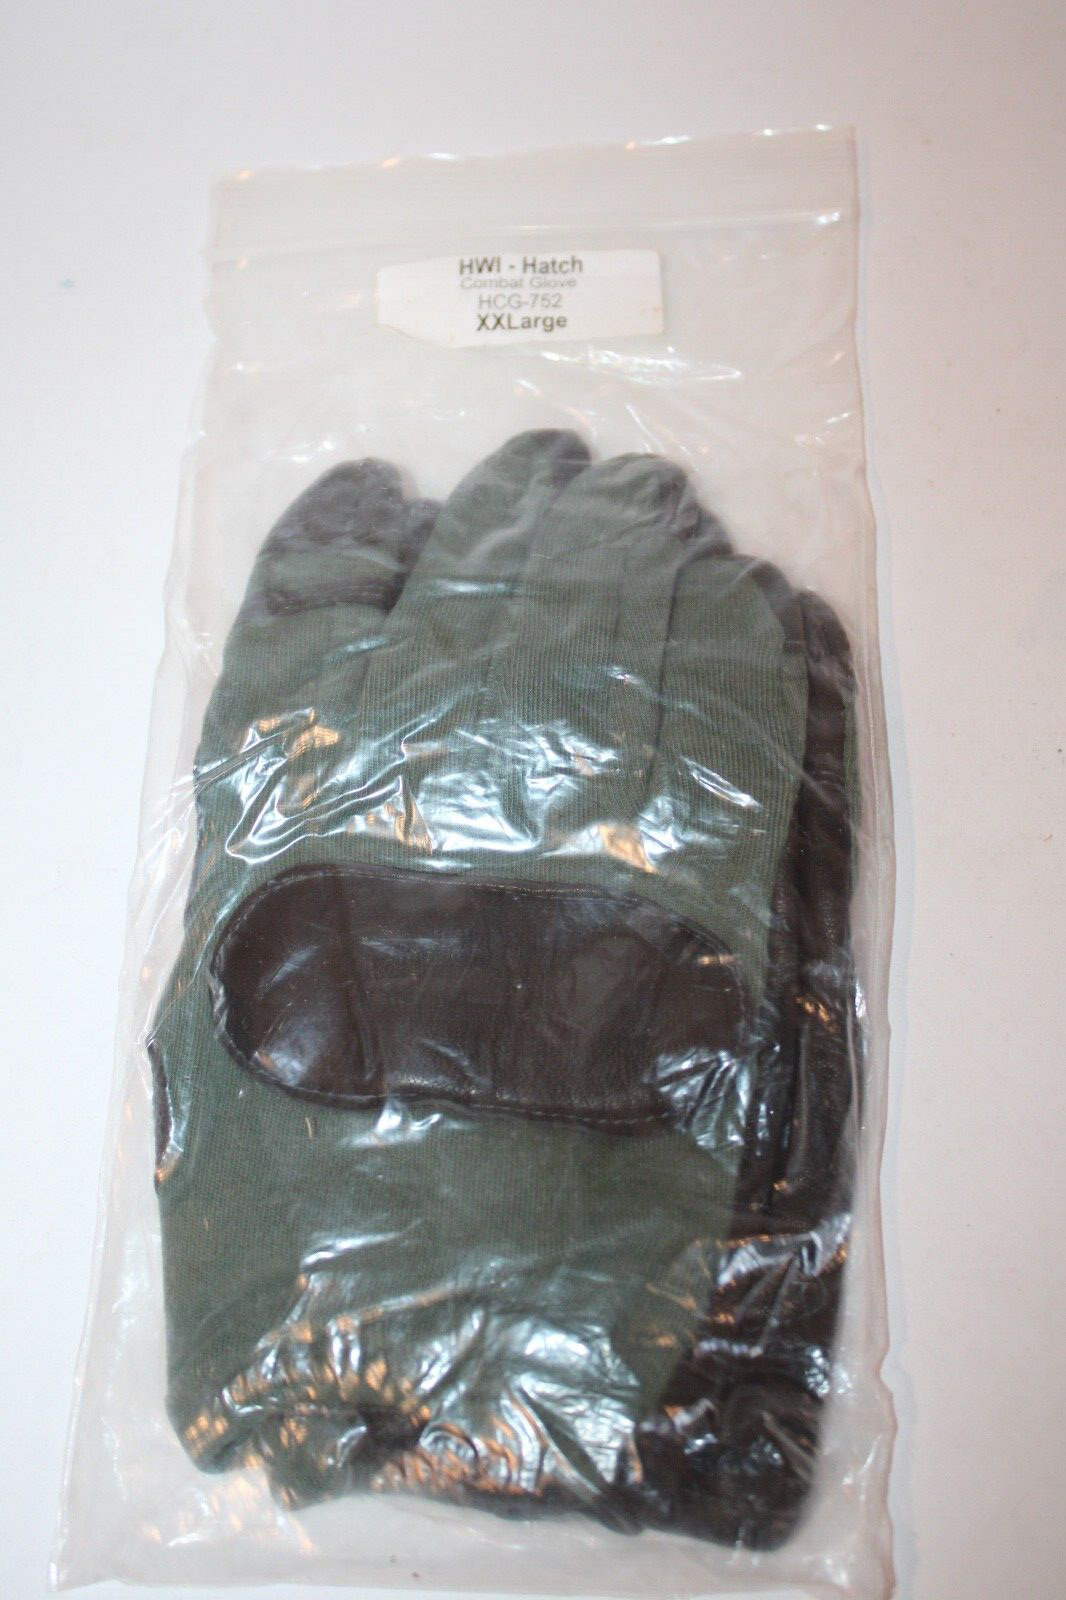 2X Large HWI Hatch Army Combat Gloves XXLarge HCG-752